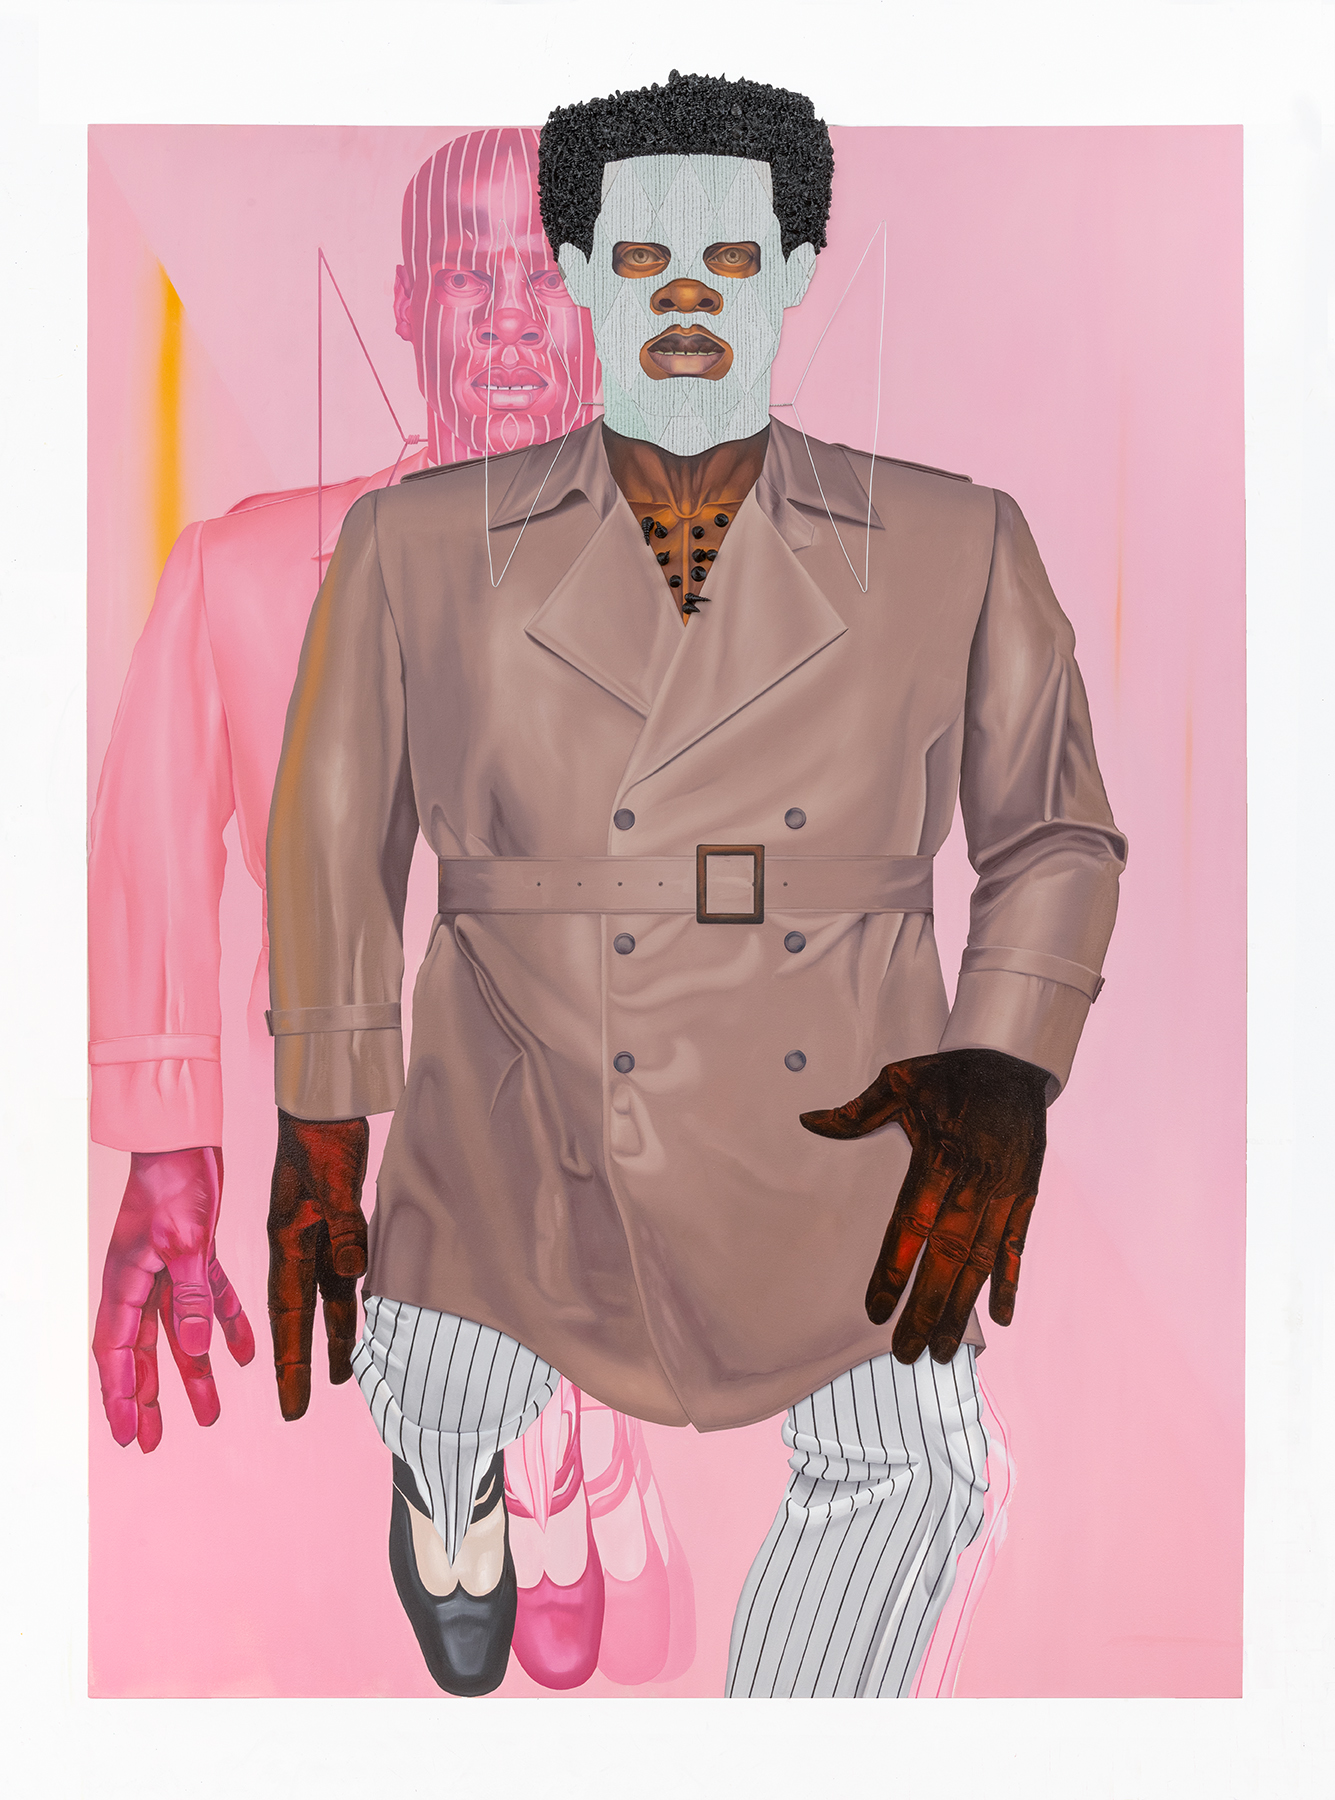 Jeff Sonhouse's painting Untitled, 2021